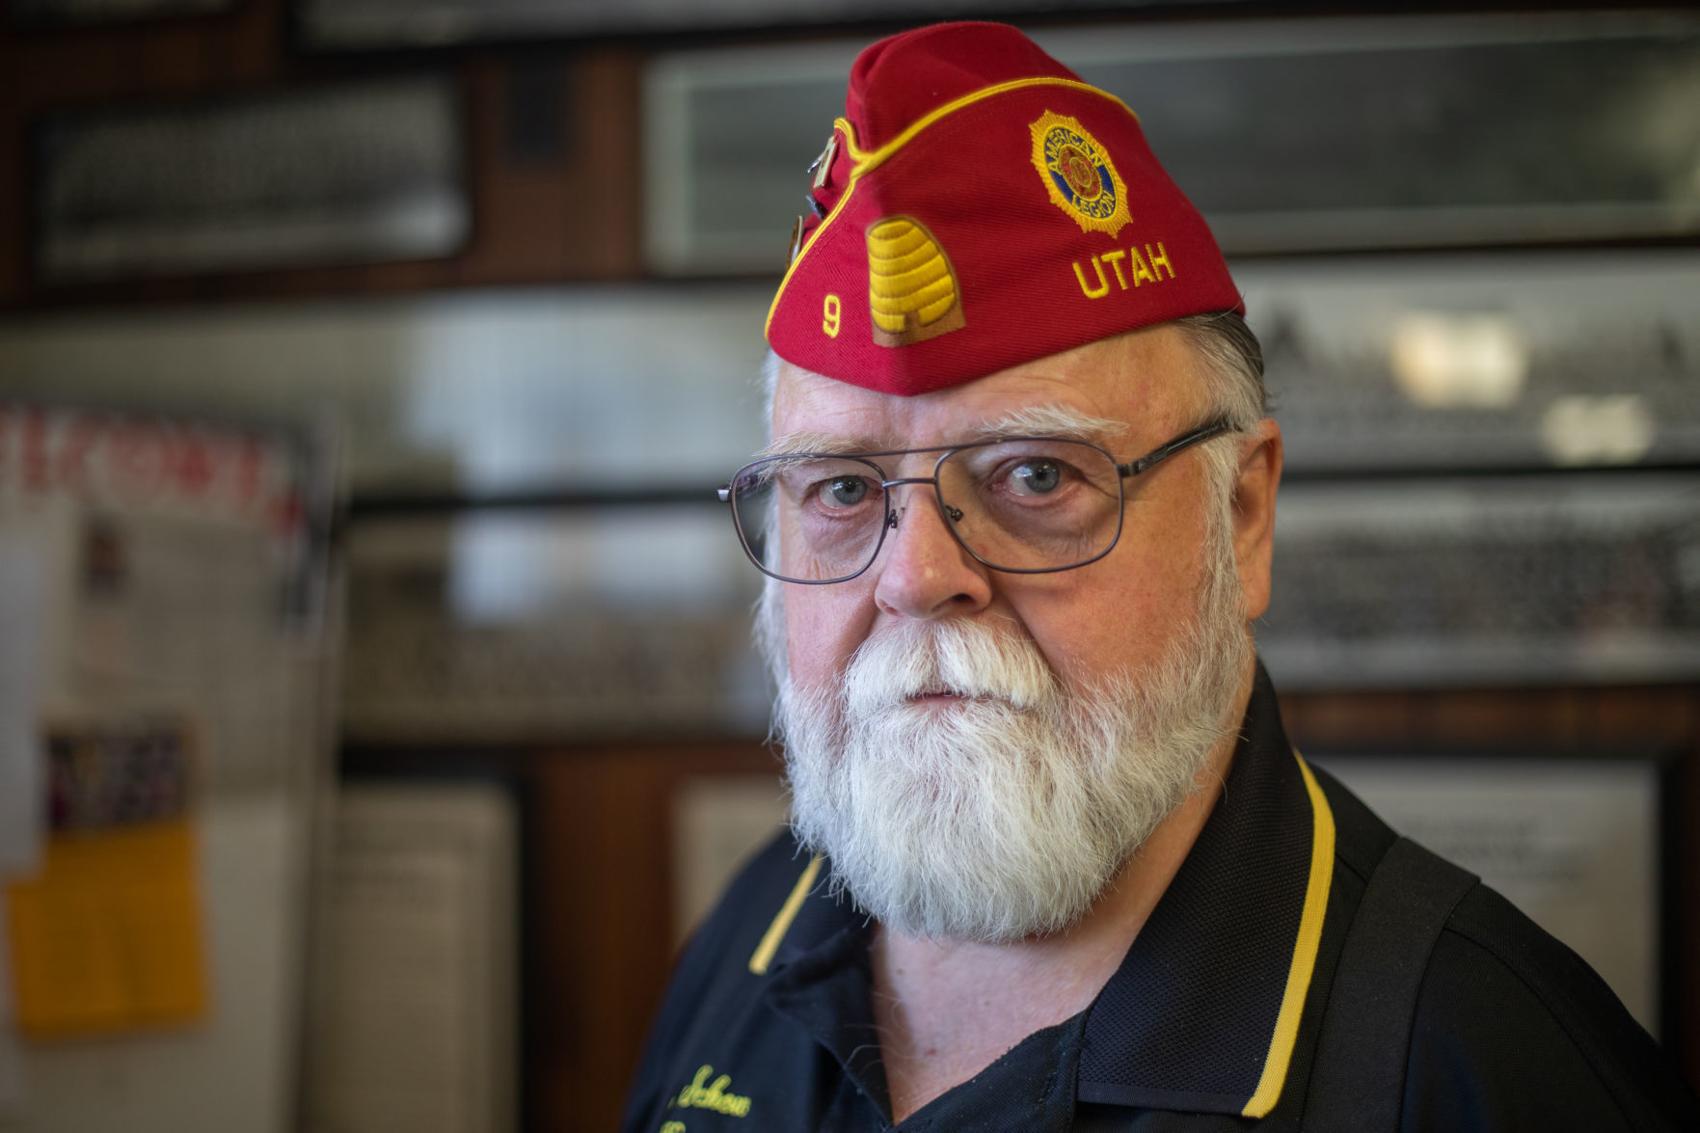 Ogden Vietnam veteran has dedicated his life to helping other vets